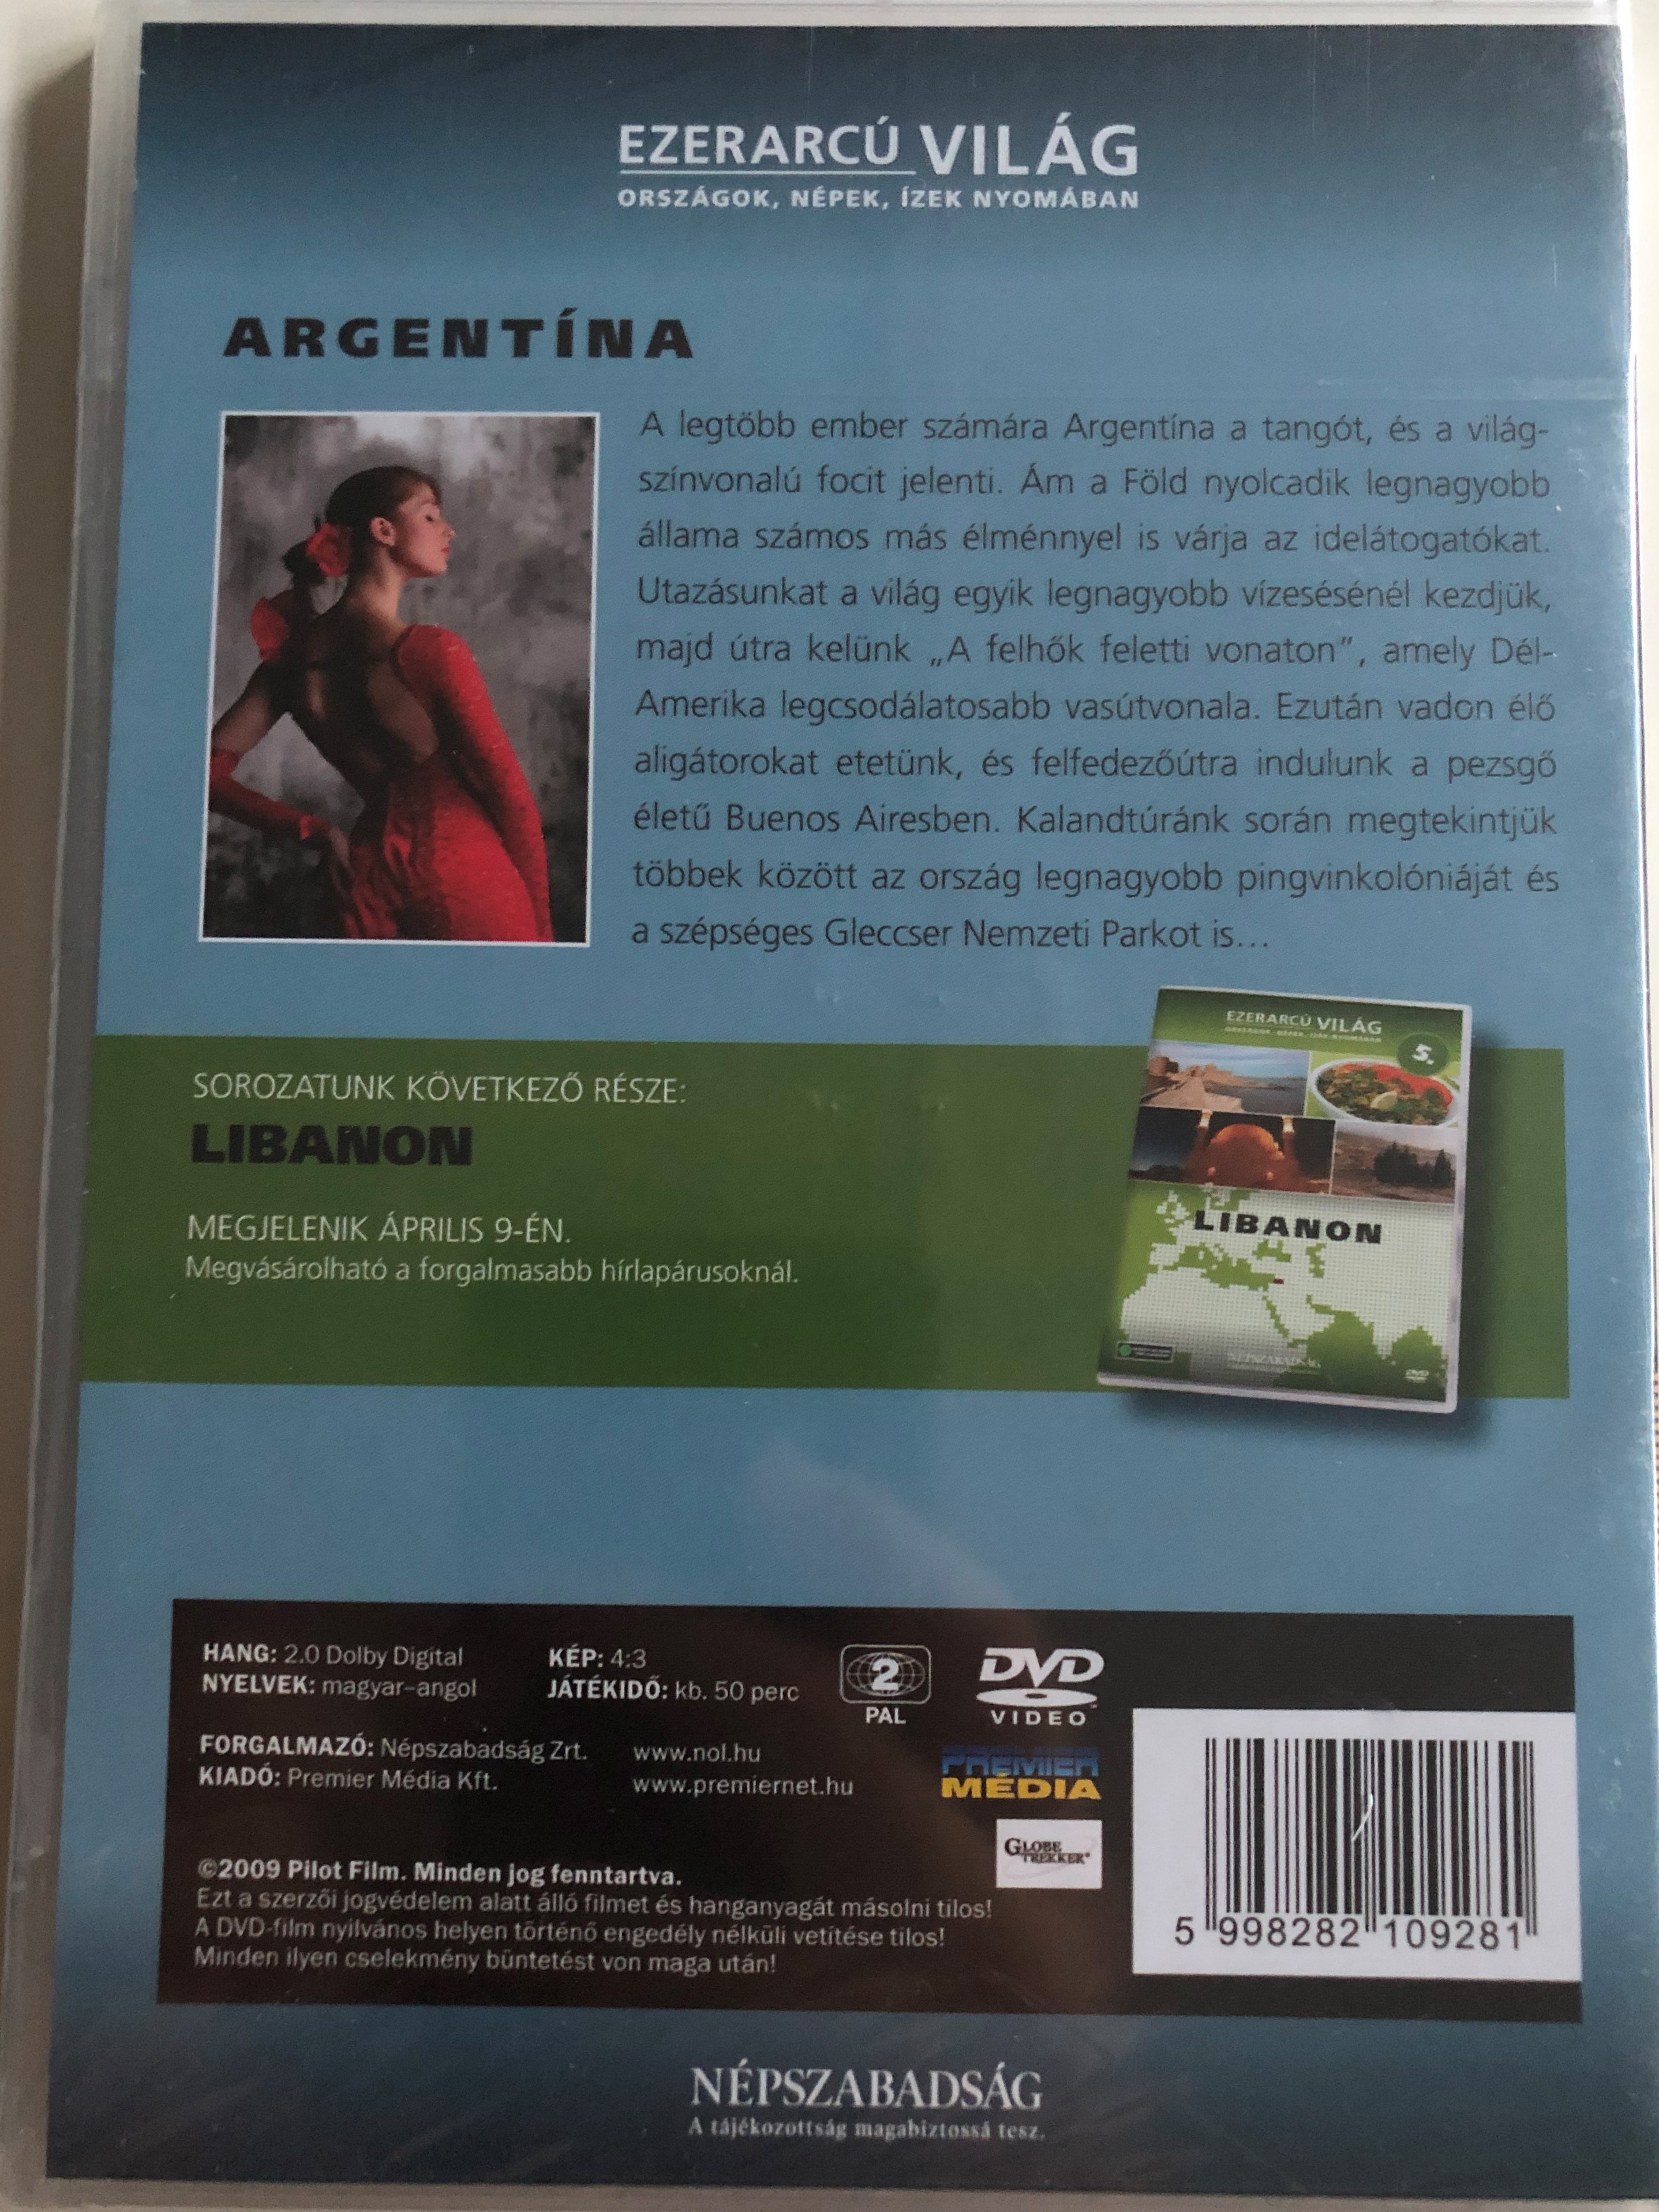 ezerarc-vil-g-vol.-4-argentina-dvd-2009-orsz-gok-n-pek-zek-nyom-ban-20-x-dvd-set-2009-n-pszabads-g-premier-media-pilot-film-documentary-series-about-our-world-2-.jpg